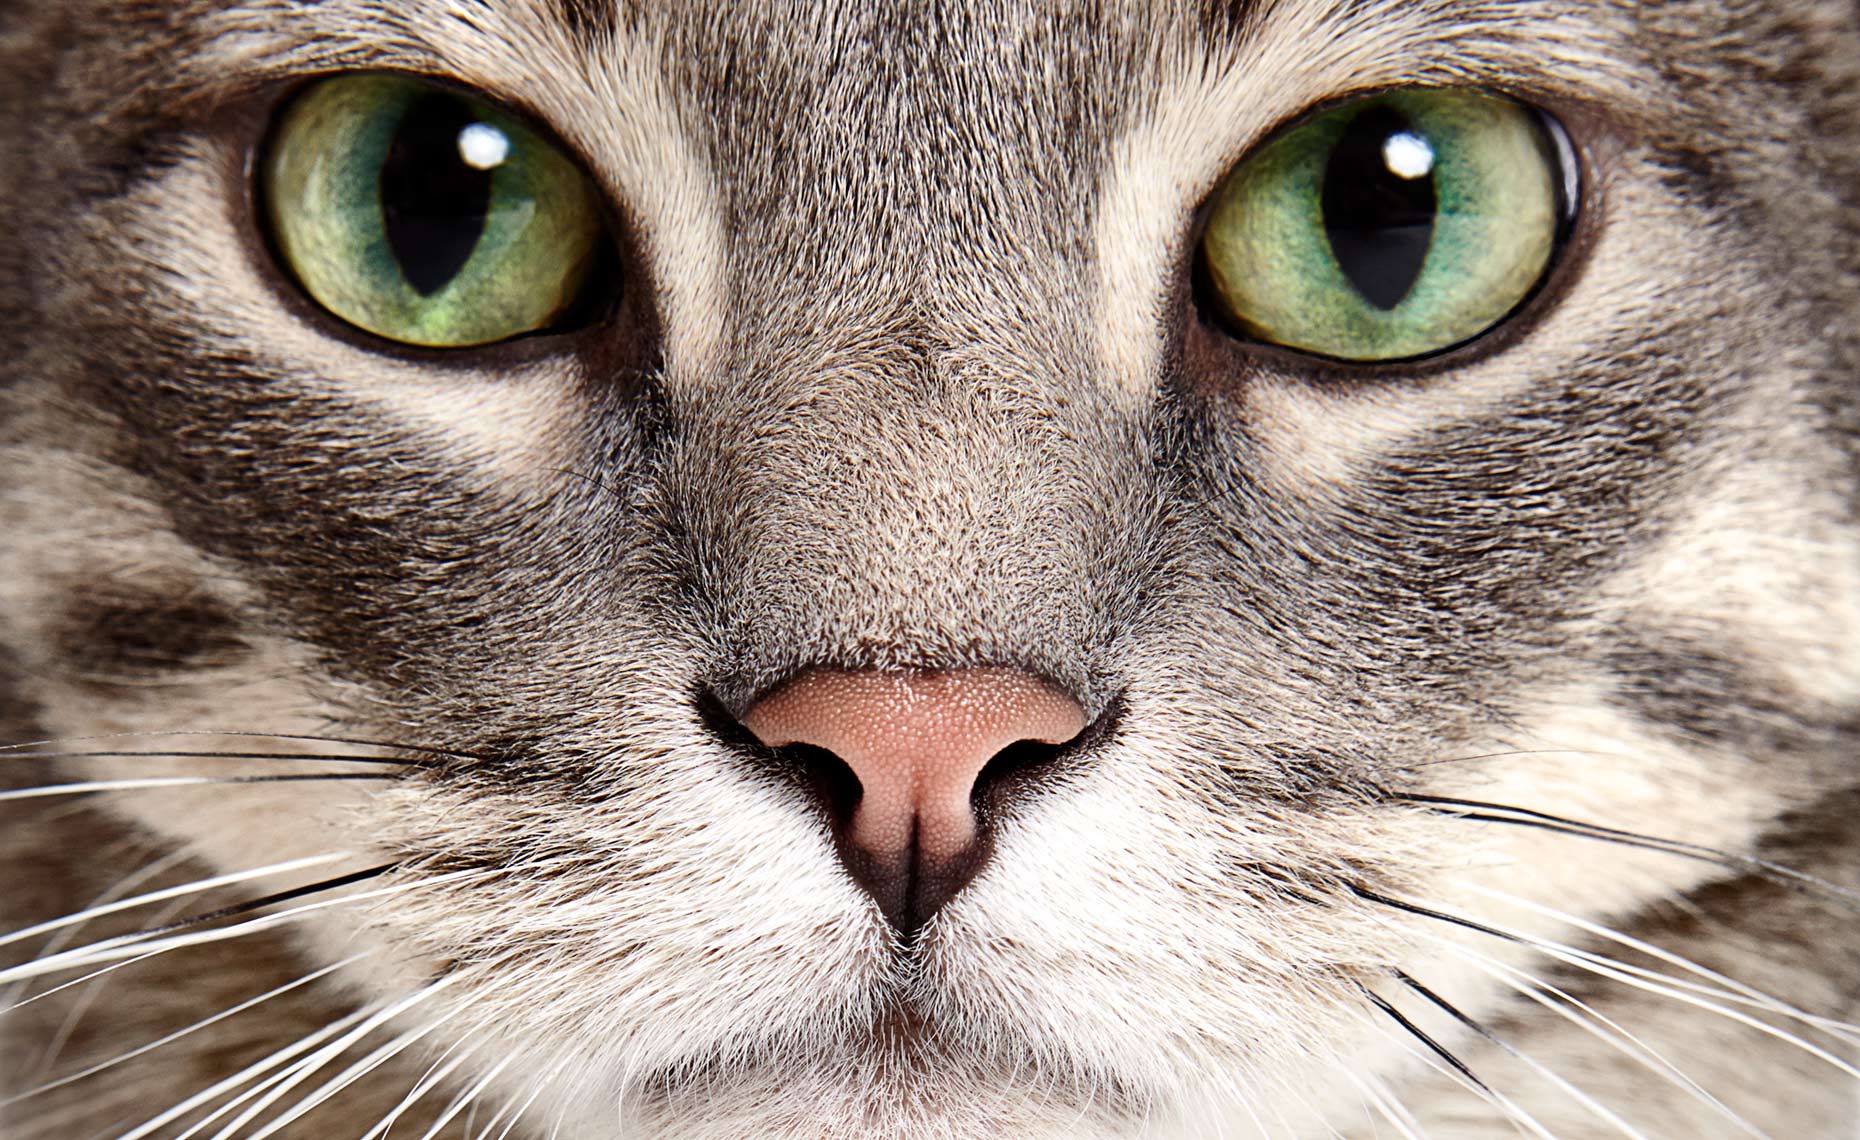 Cat Close up face detail